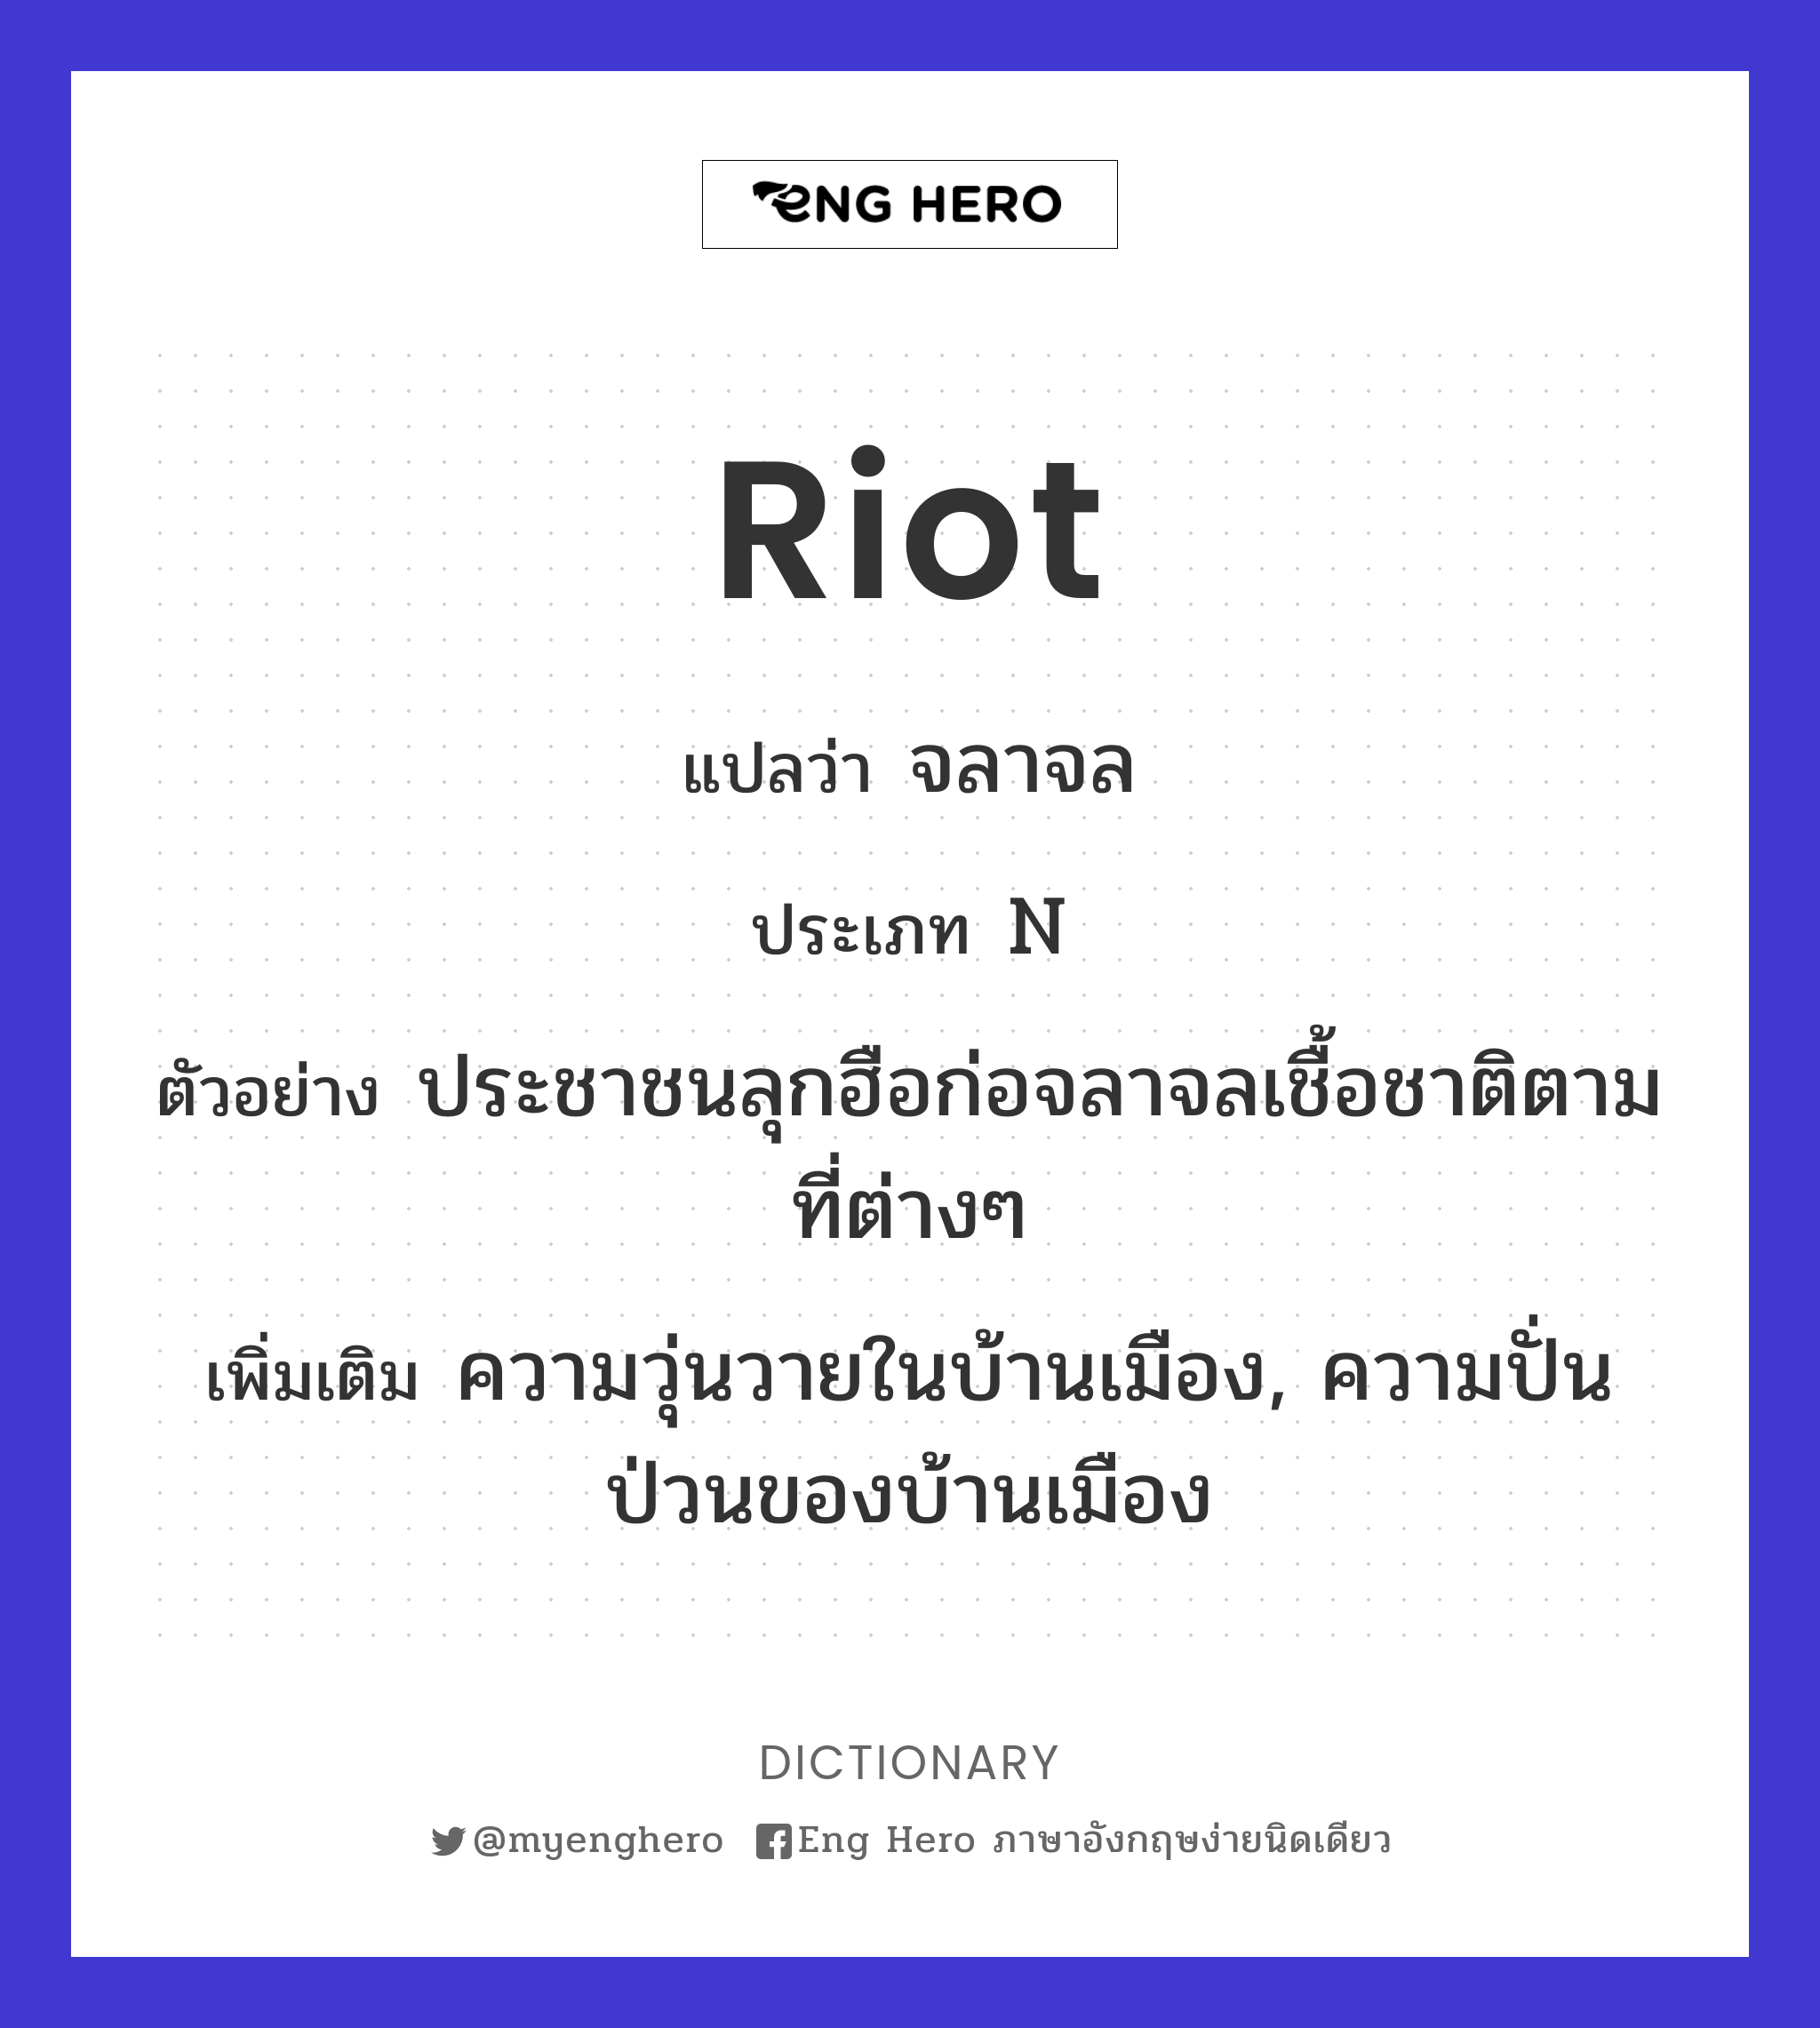 riot